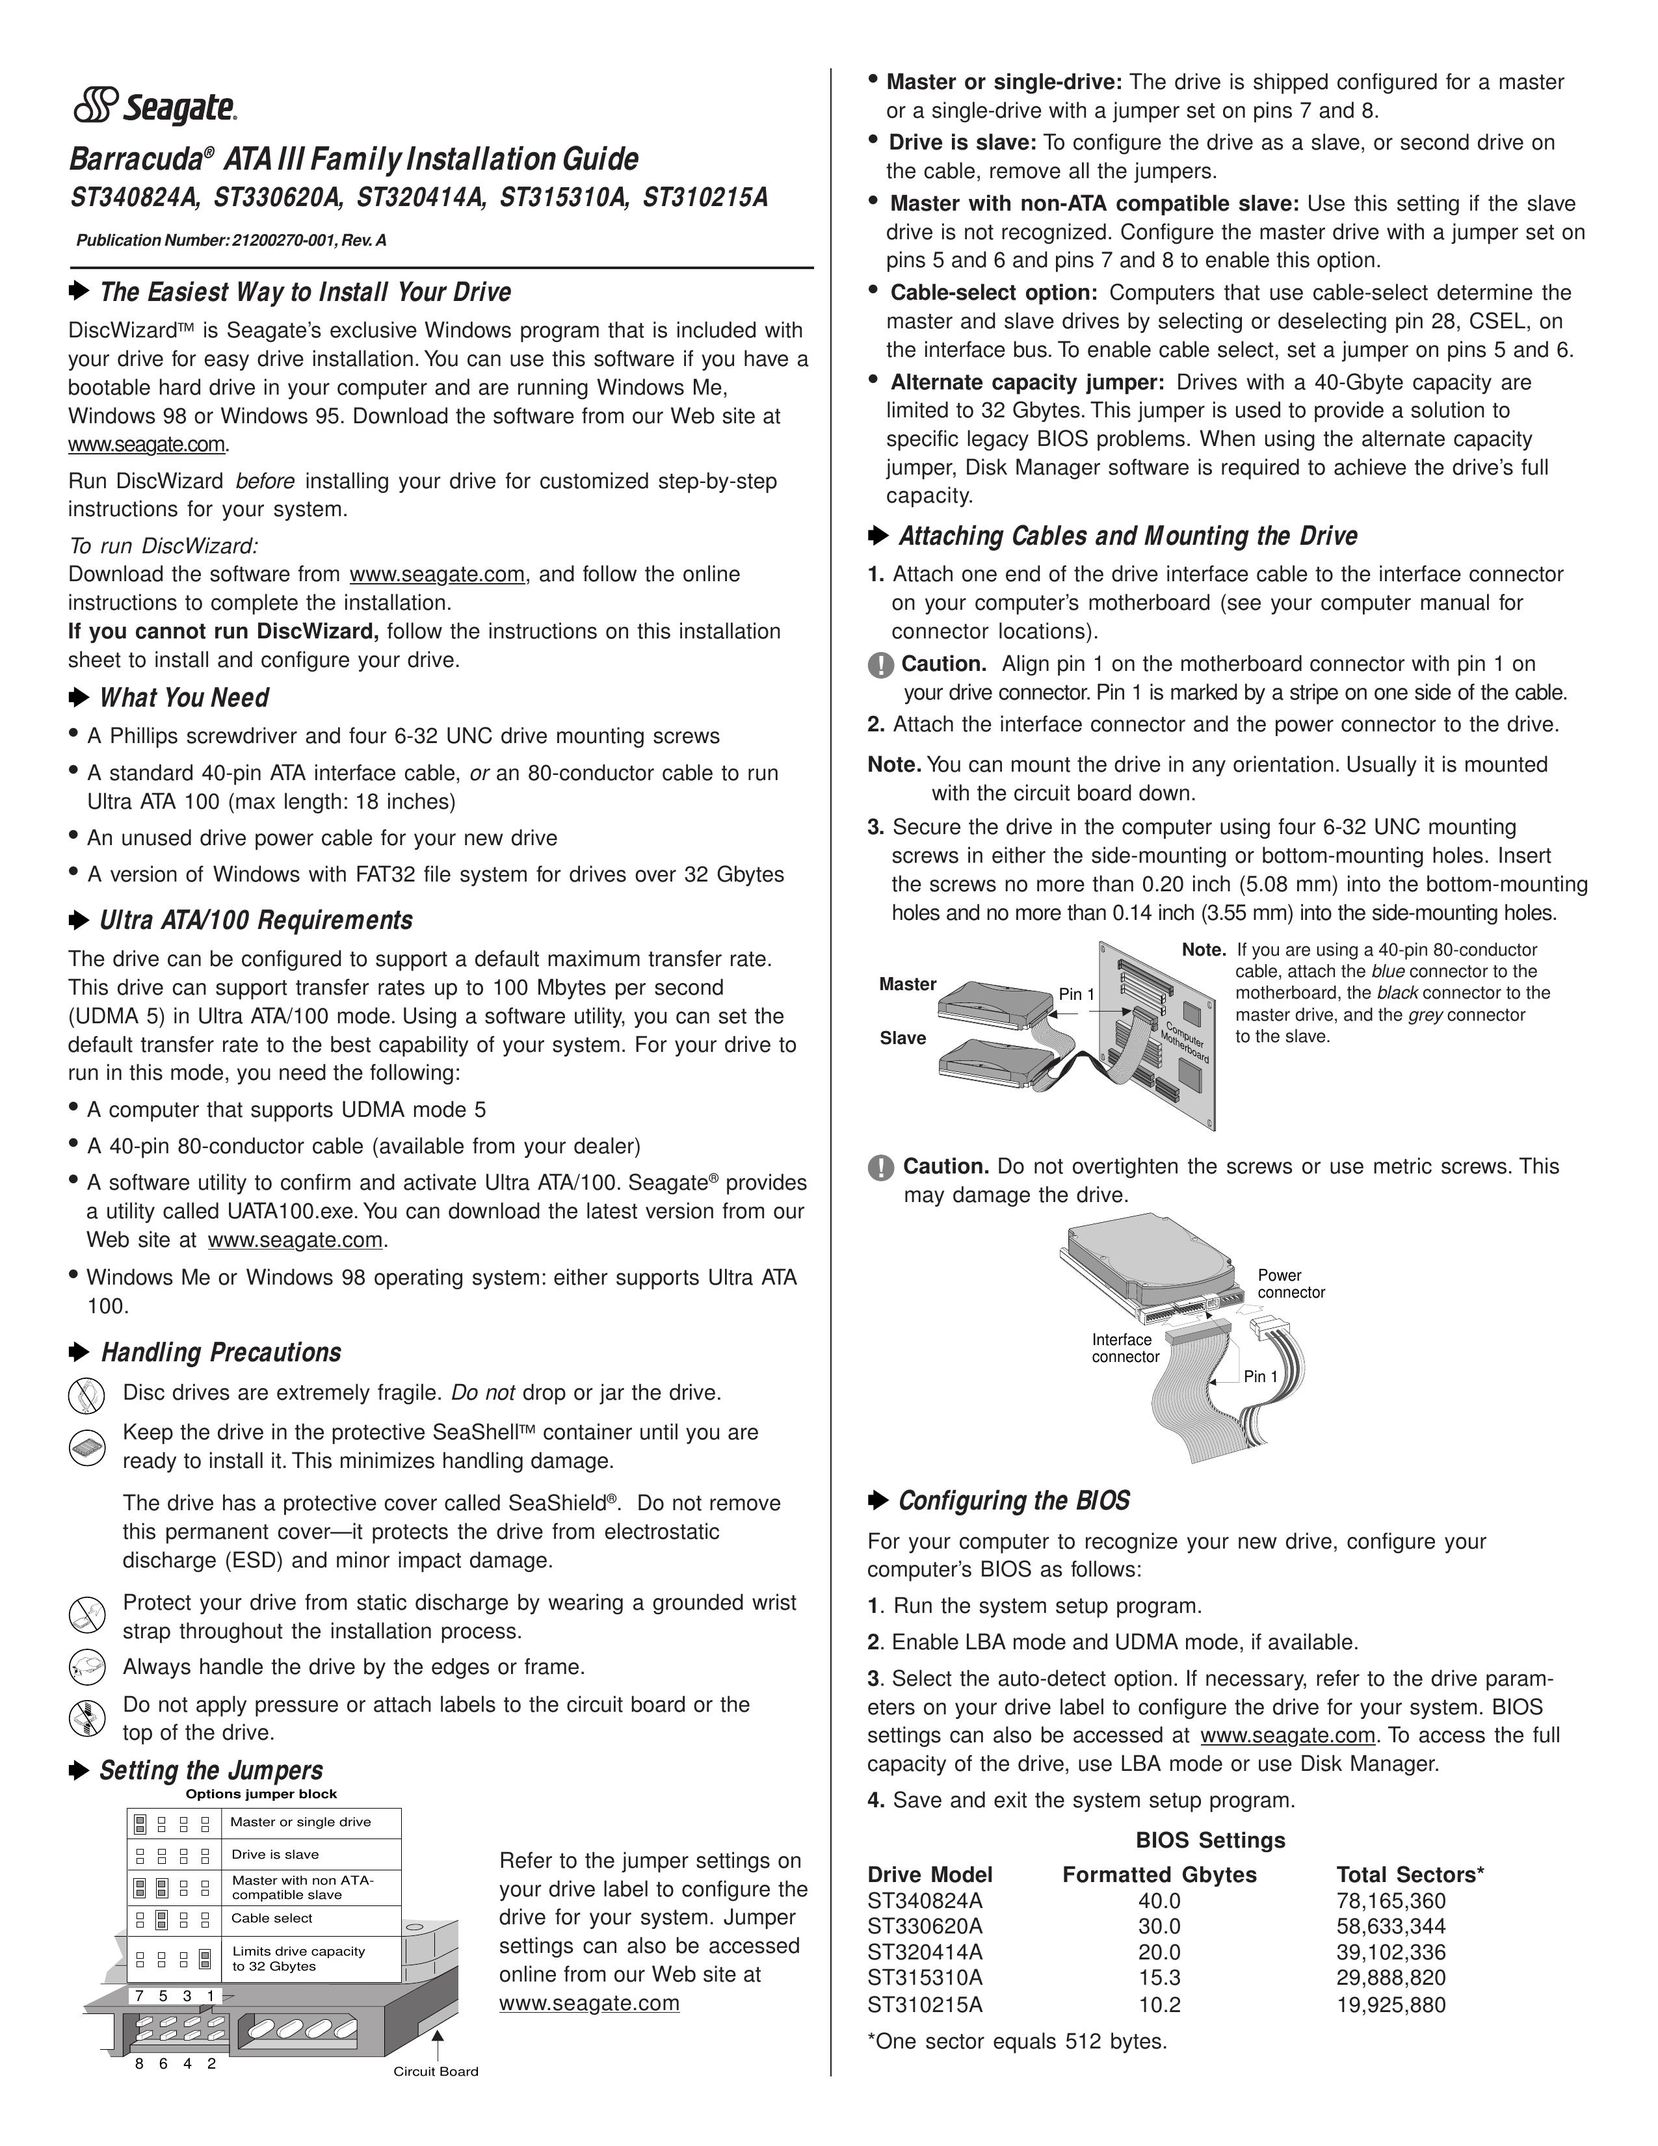 Barracuda Networks ST320414A Computer Drive User Manual